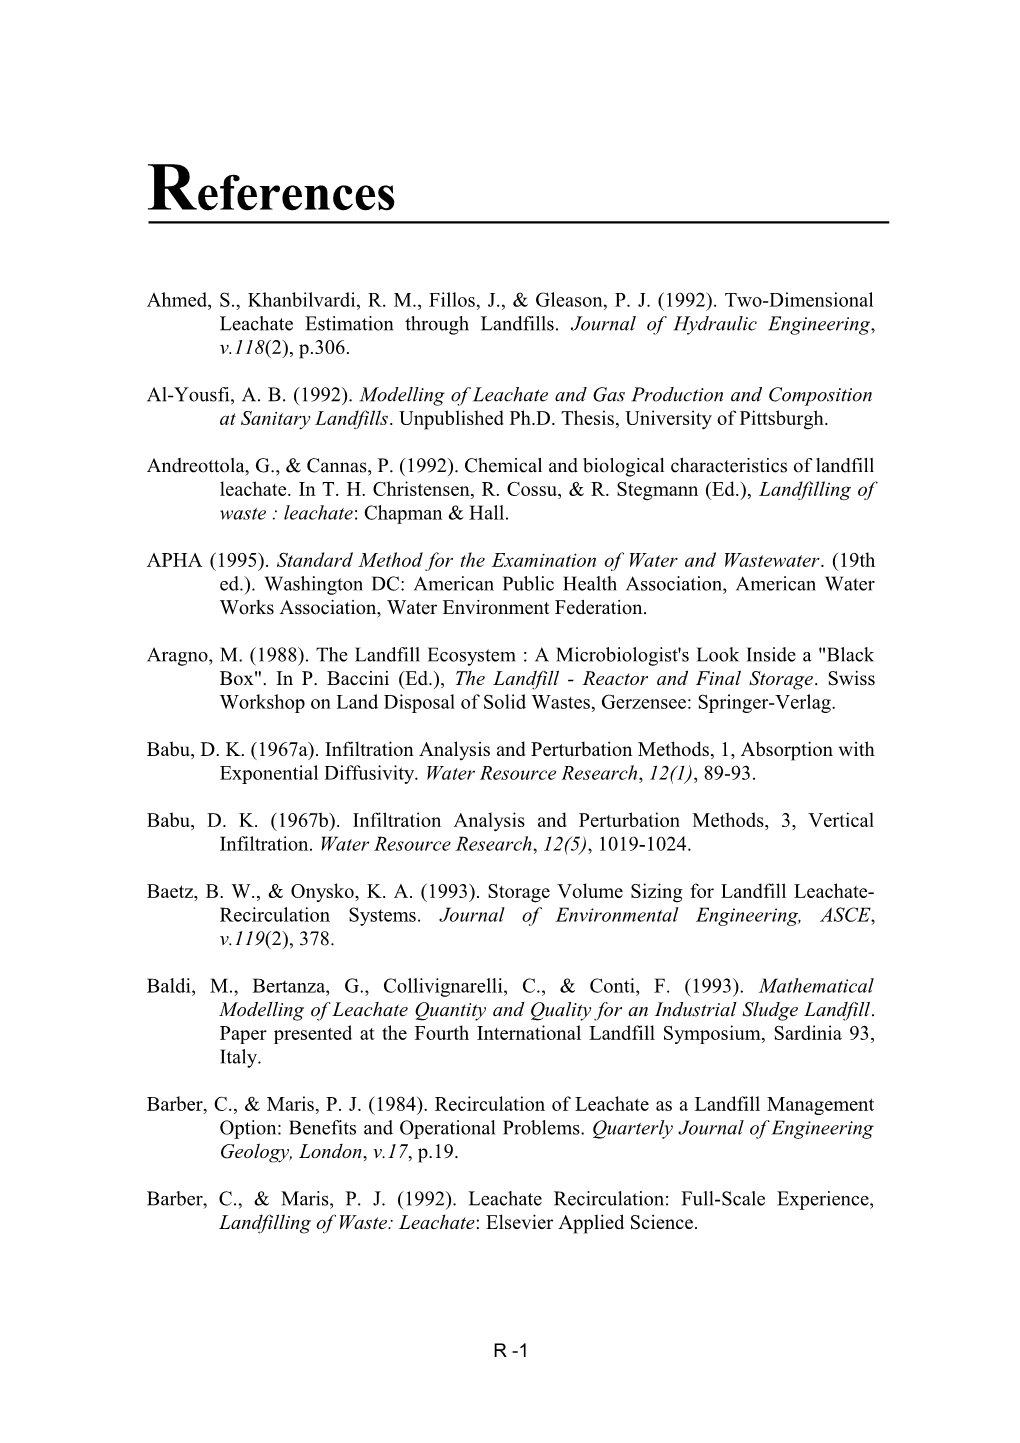 Ahmed, S., Khanbilvardi, R. M., Fillos, J., & Gleason, P. J. (1992). Two-Dimensional Leachate